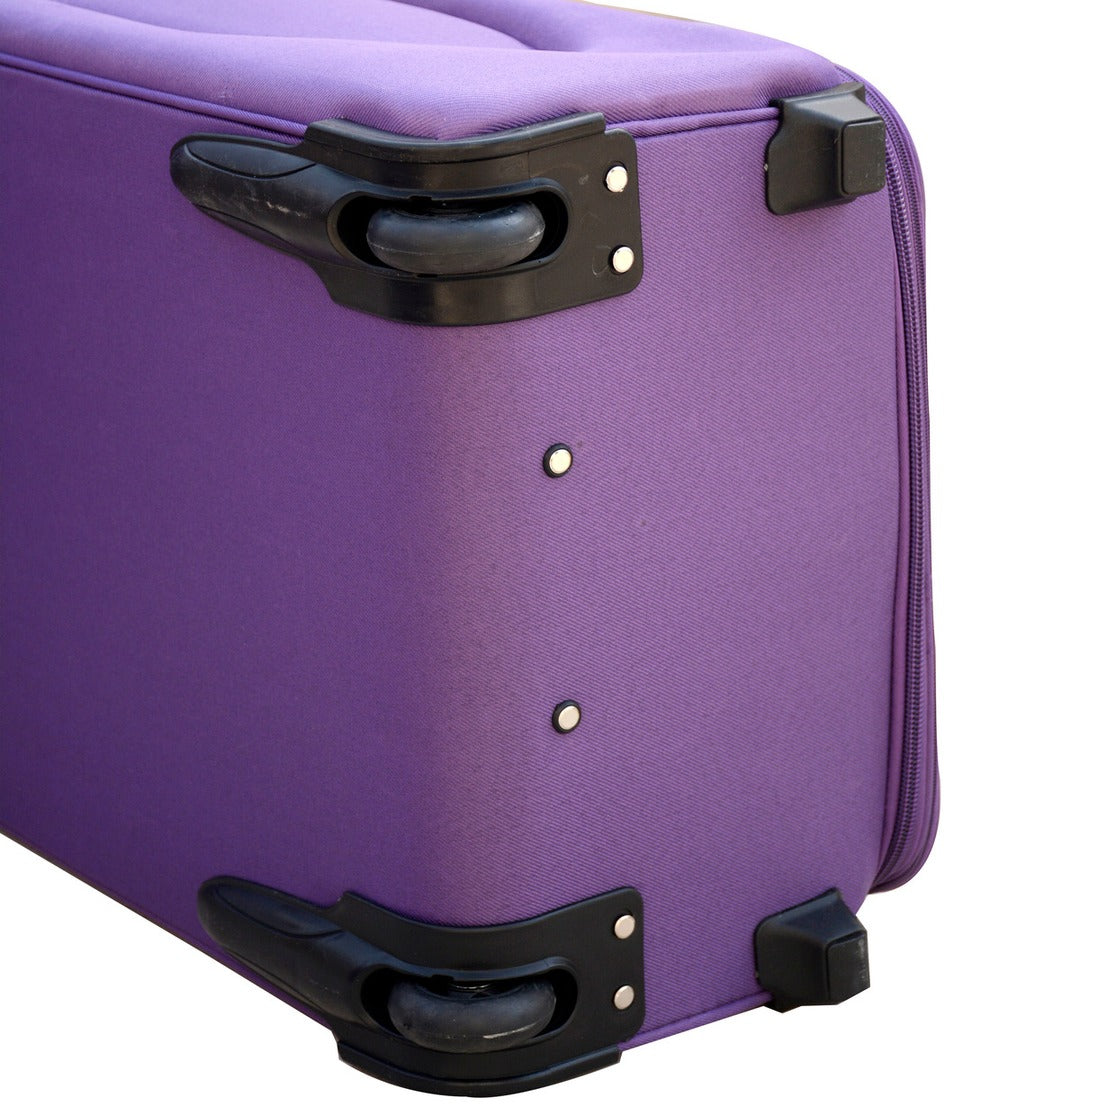 20" Purple Colour SJ JIAN 2 Wheel Luggage Lightweight Soft Material Carry On Trolley Bag Zaappy.com